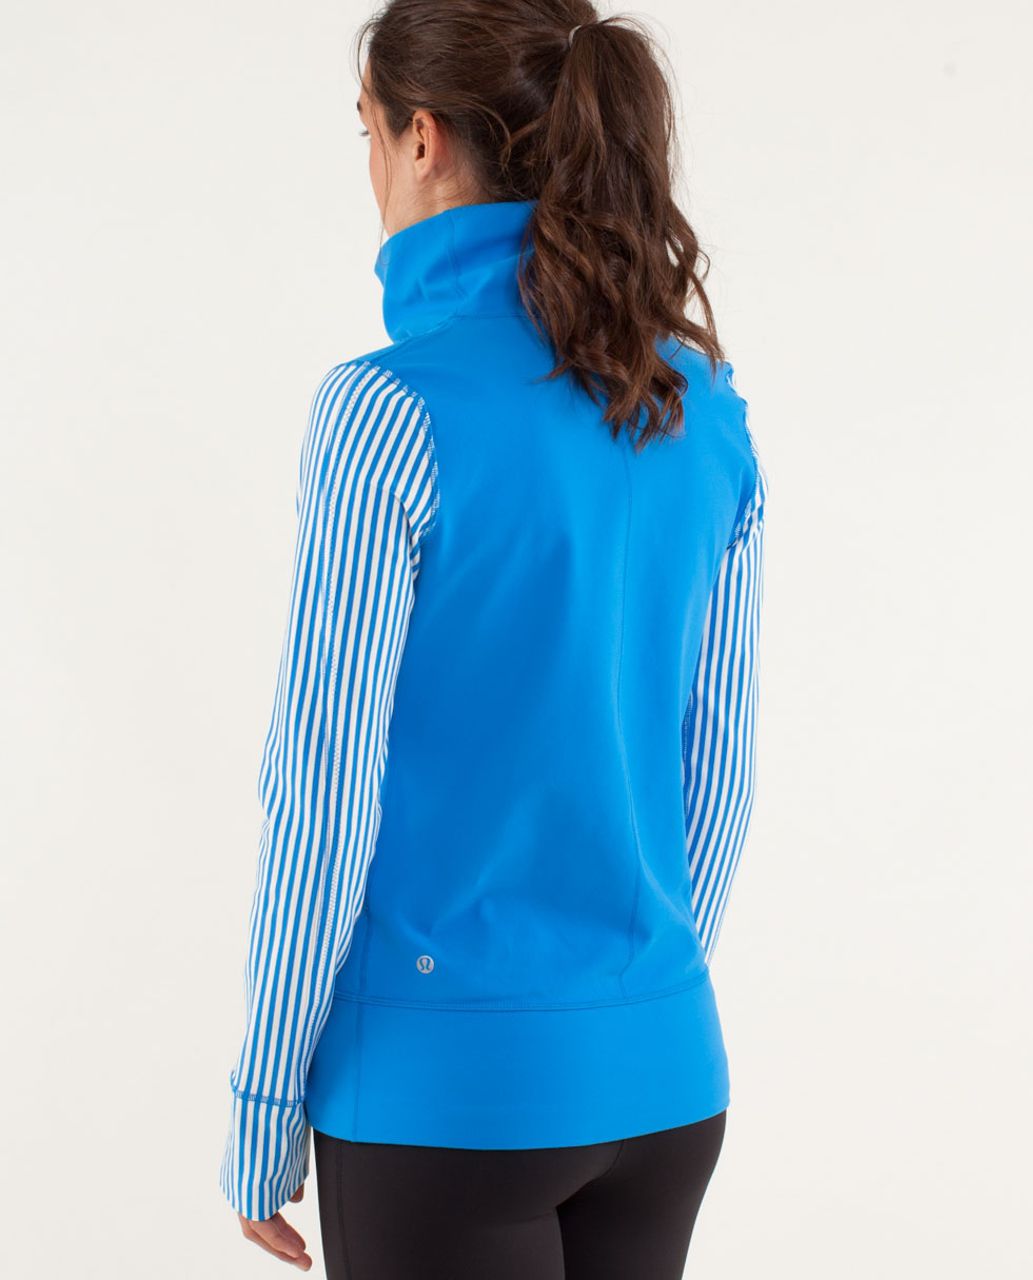 Lululemon Daily Yoga Jacket - Beaming Blue / Classic Stripe Polar Cream Beaming Blue